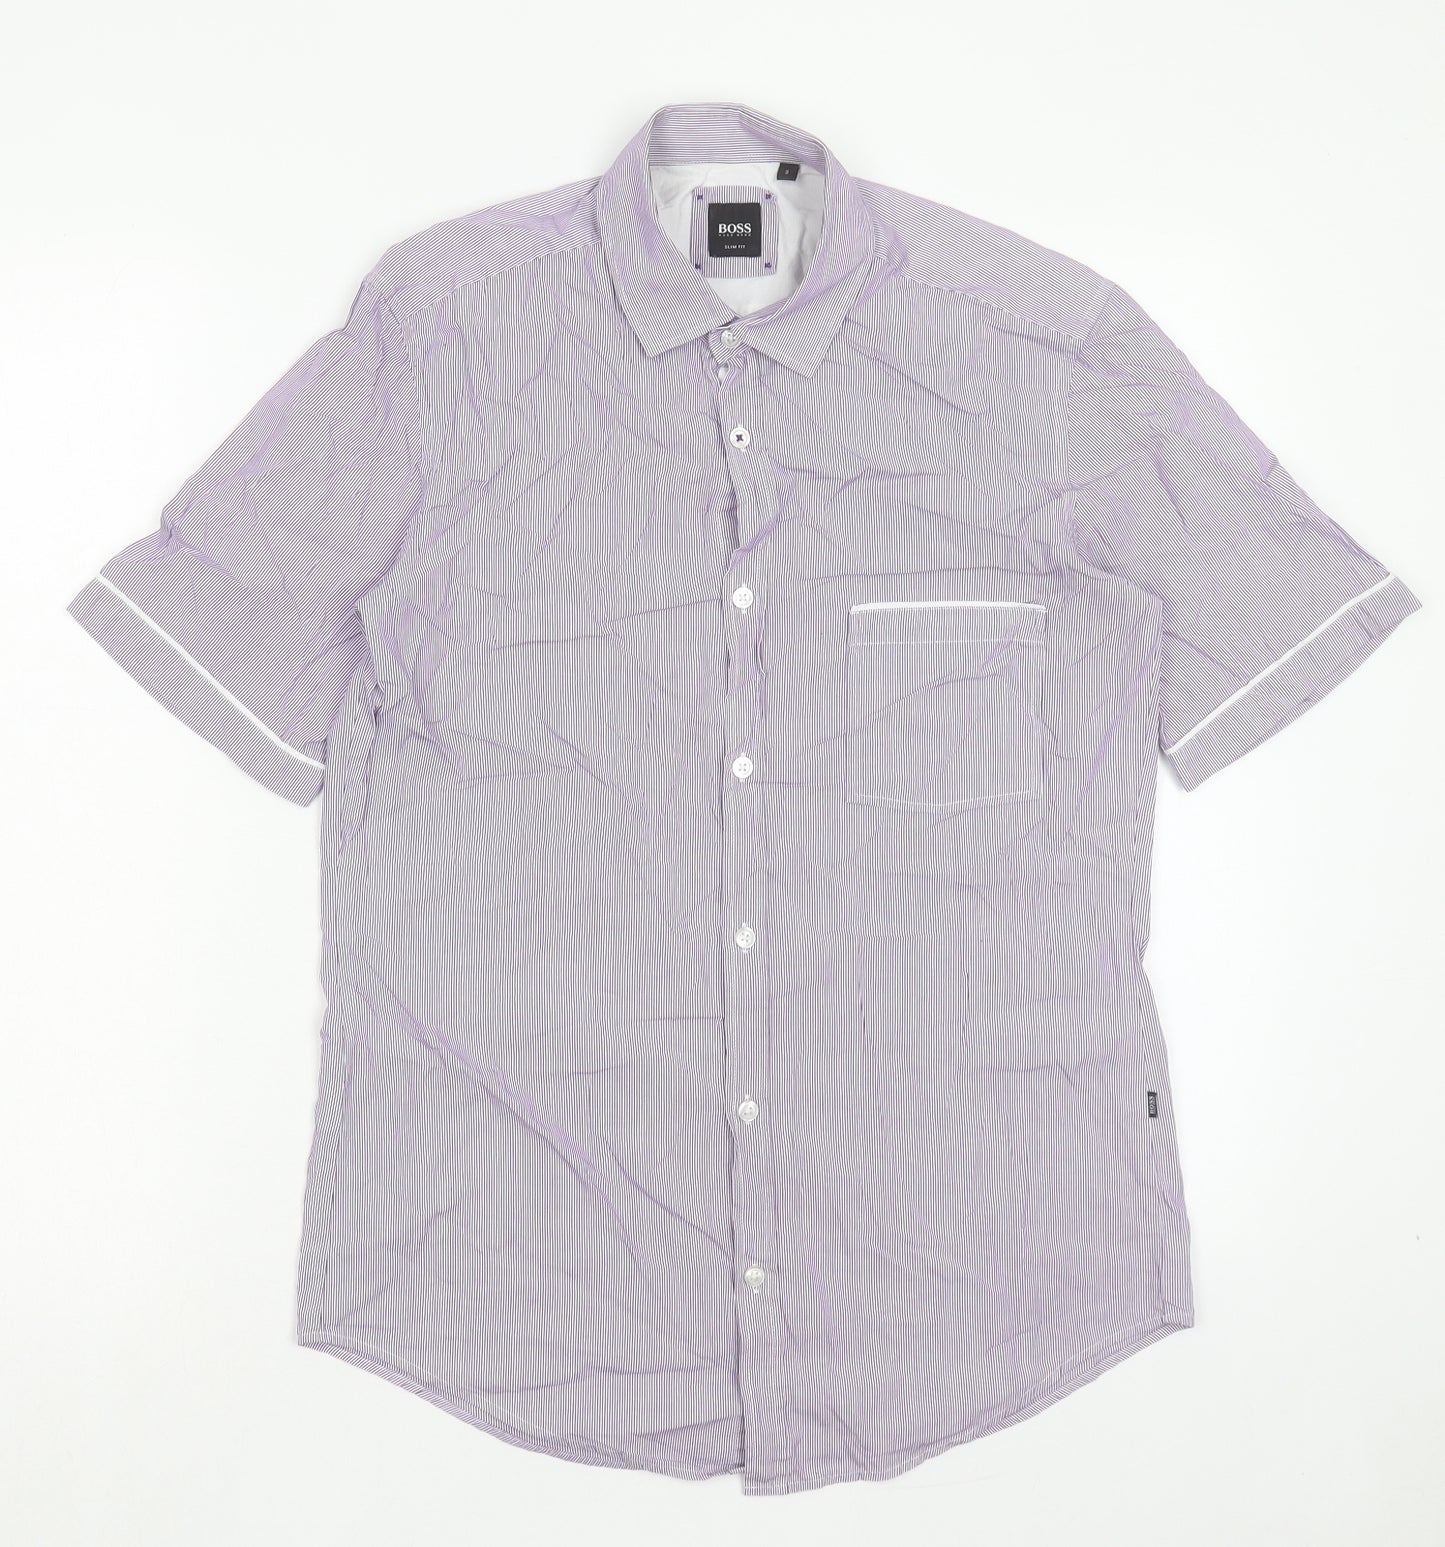 HUGO BOSS Mens Purple Striped Cotton Dress Shirt Size S Collared Button - Pocket Detail